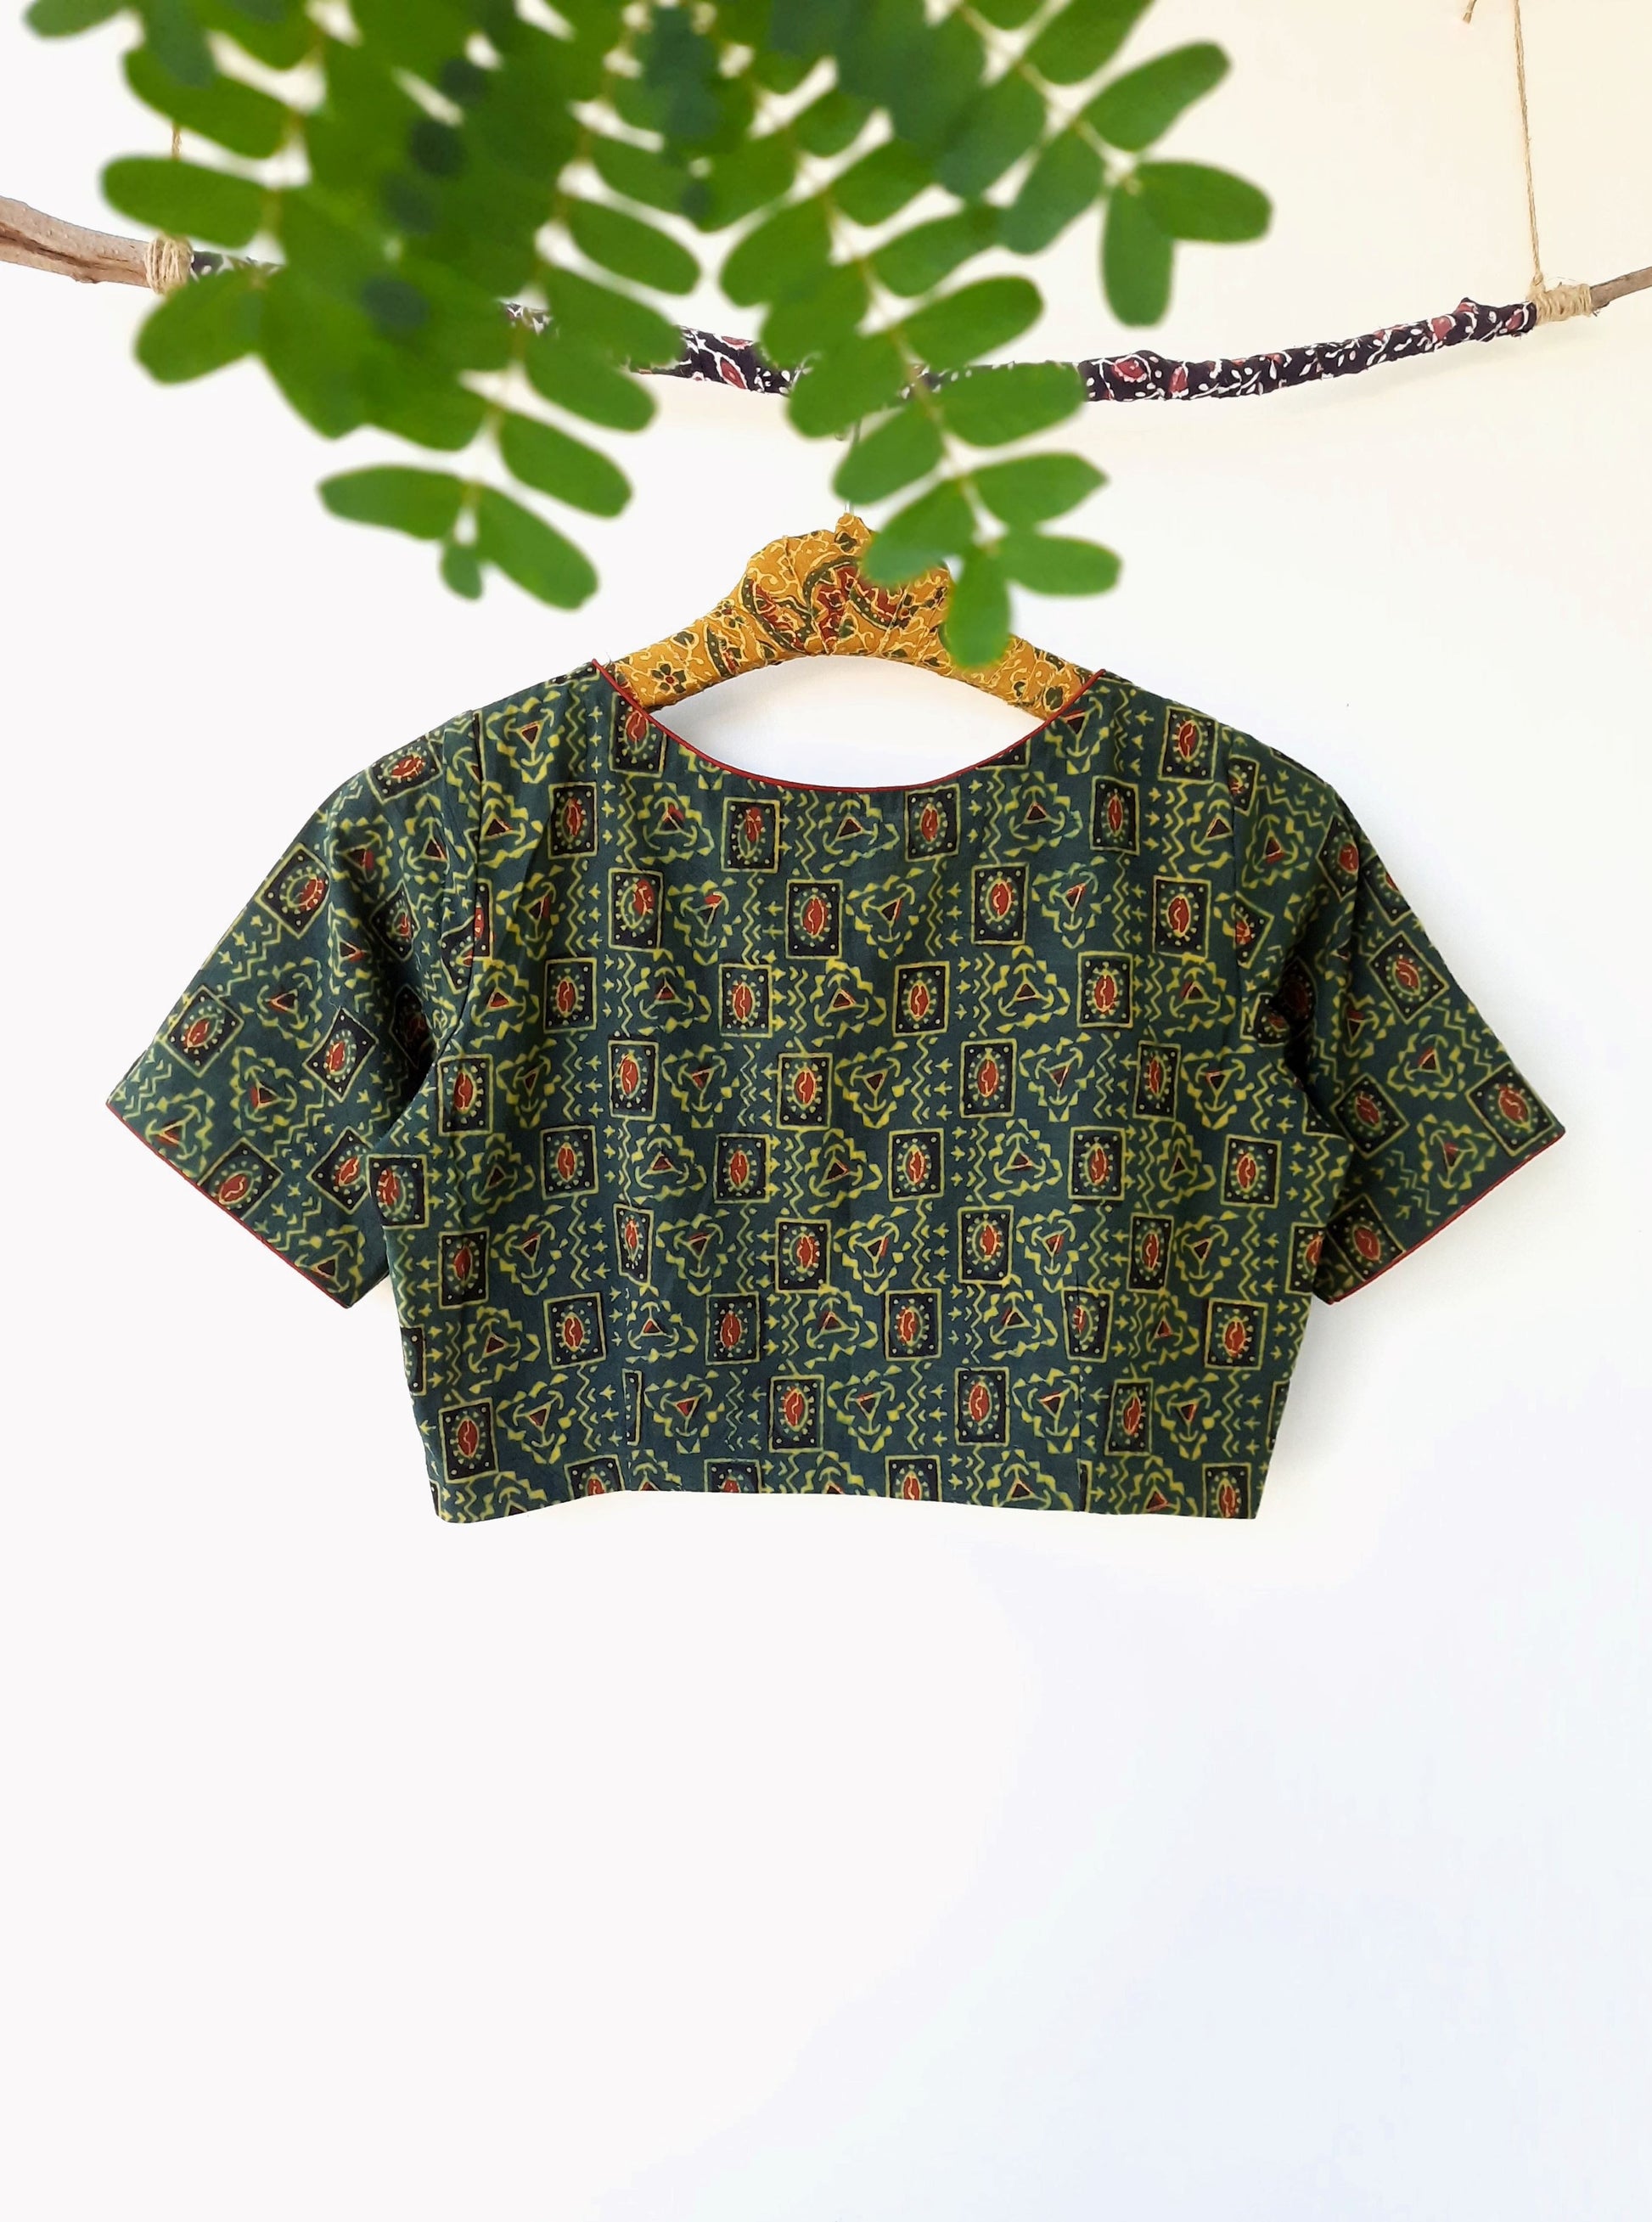 Ajrakh prints blouse in green color, Ajrakh prints cotton blouse, Handmade ajrakh hand block print saree blouse, Sari blouse in green color